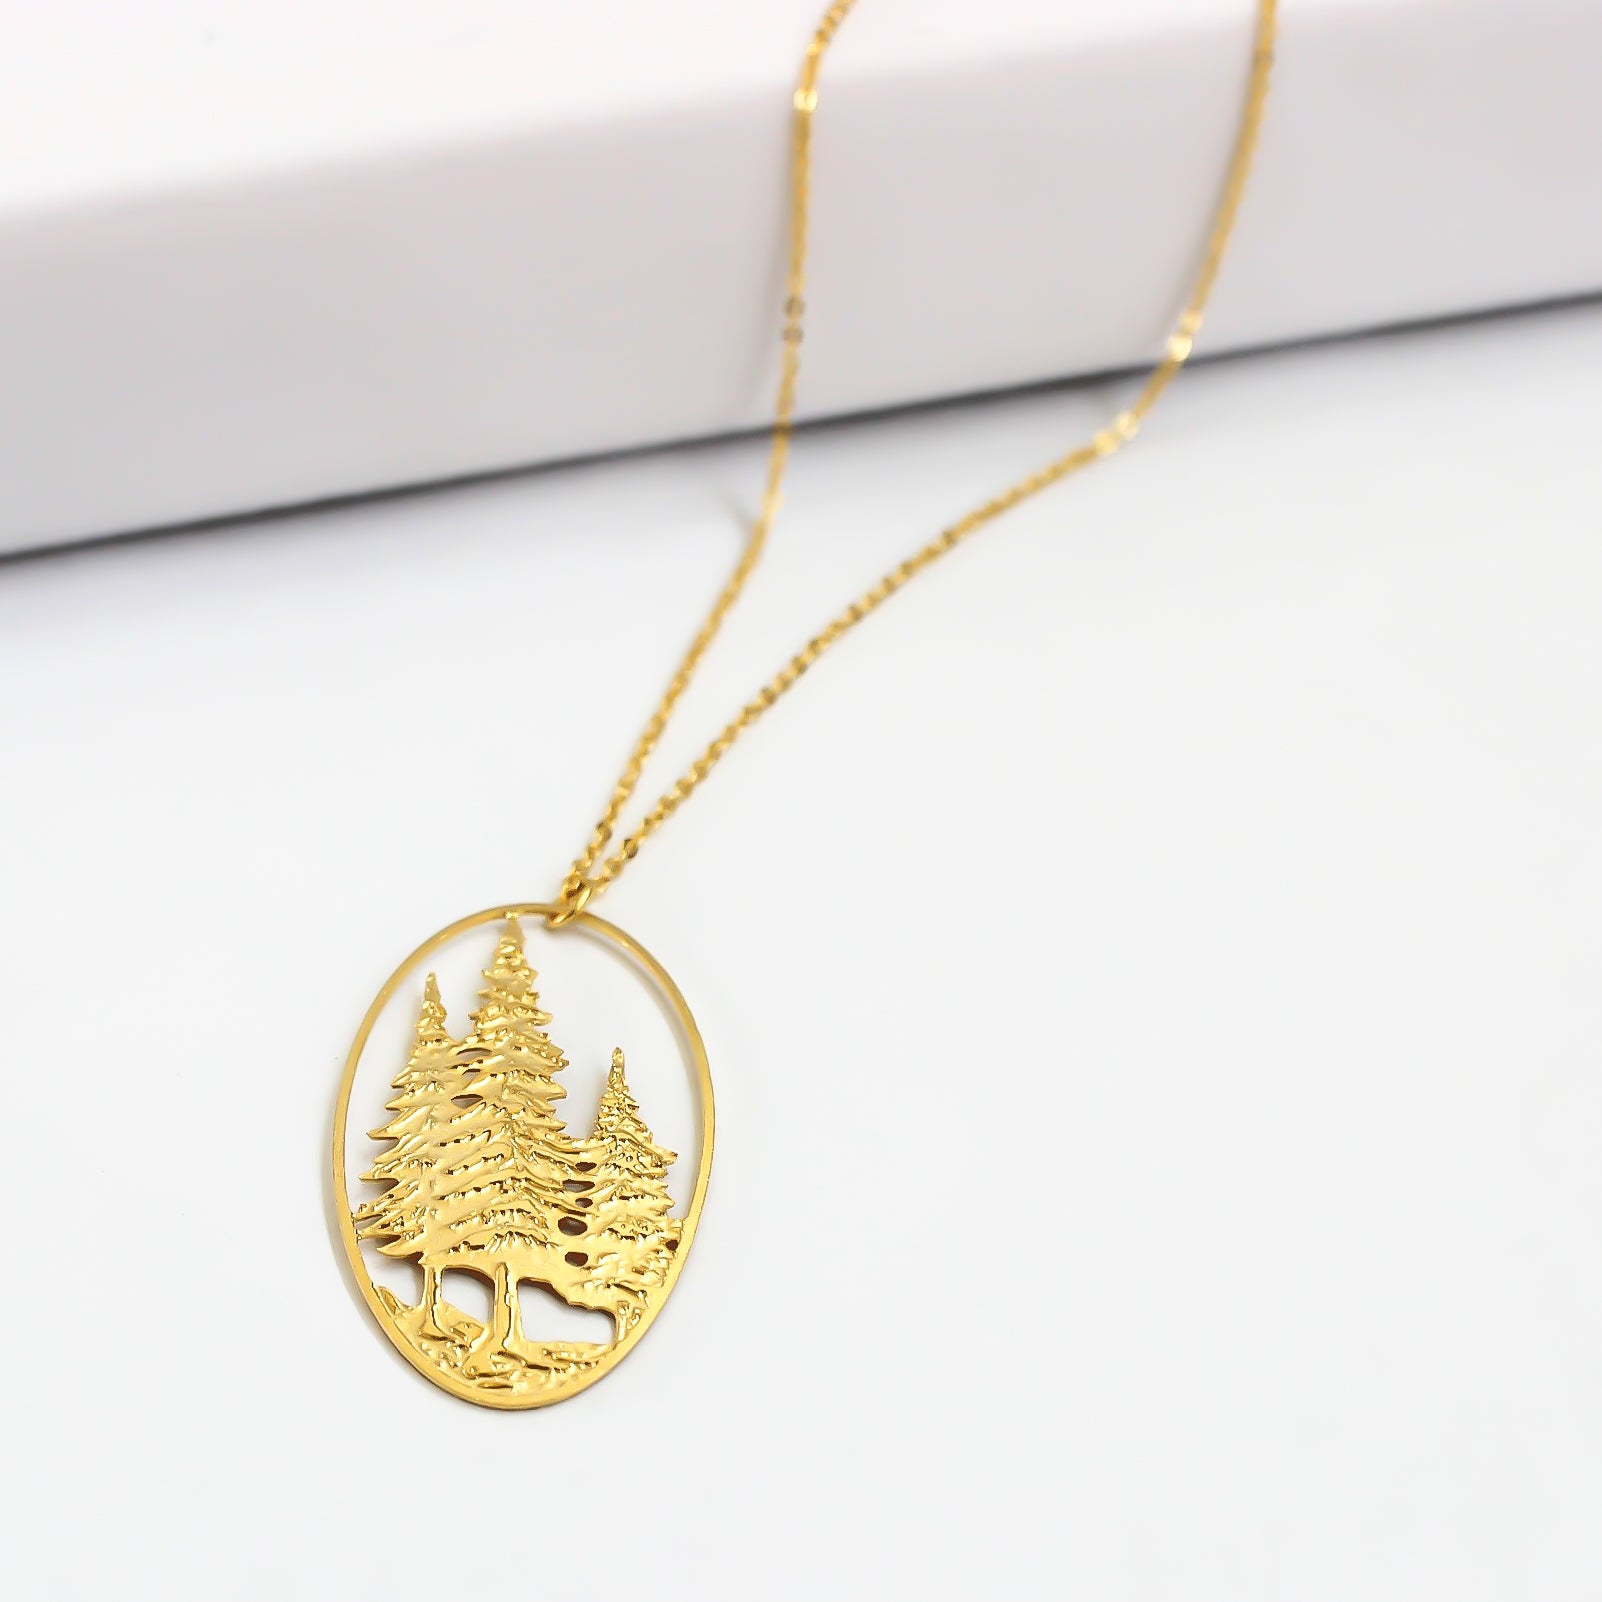 Pine Tree Necklace